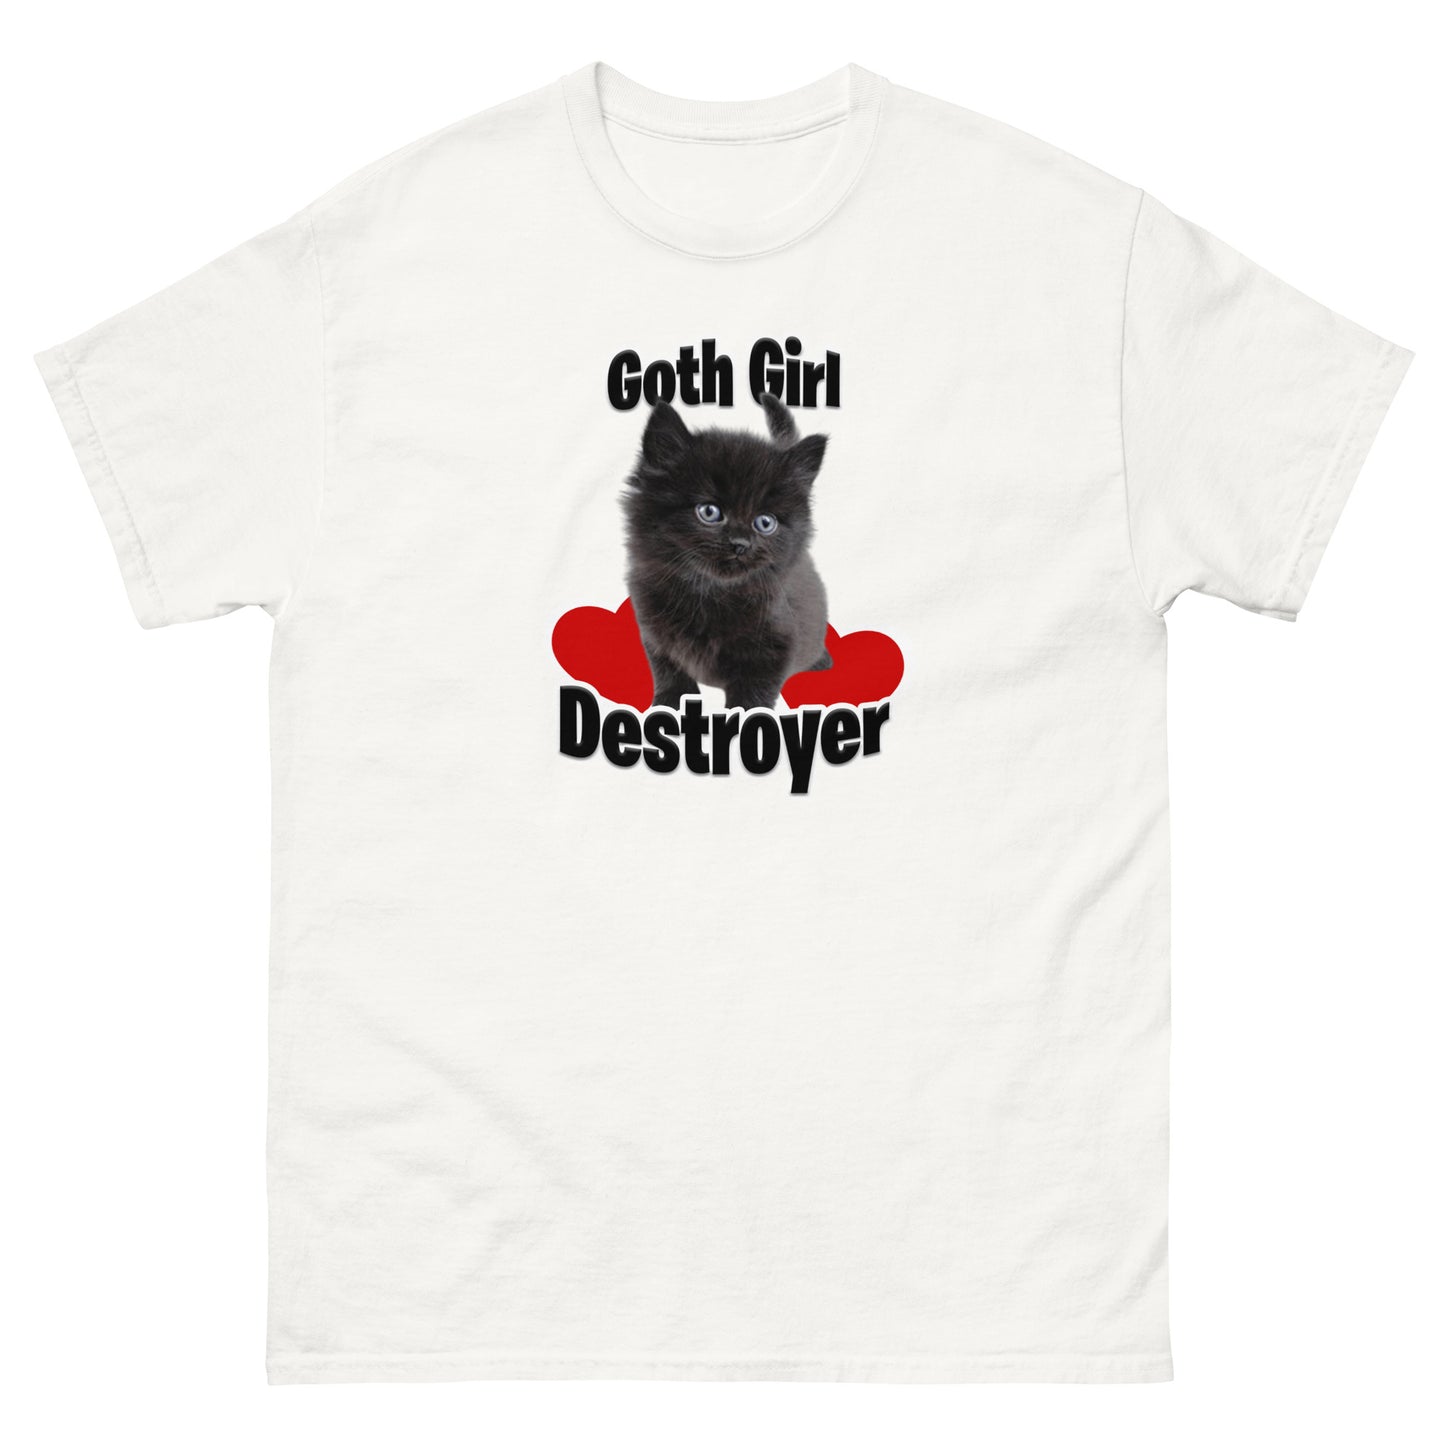 Goth Girl Destroyer Tee